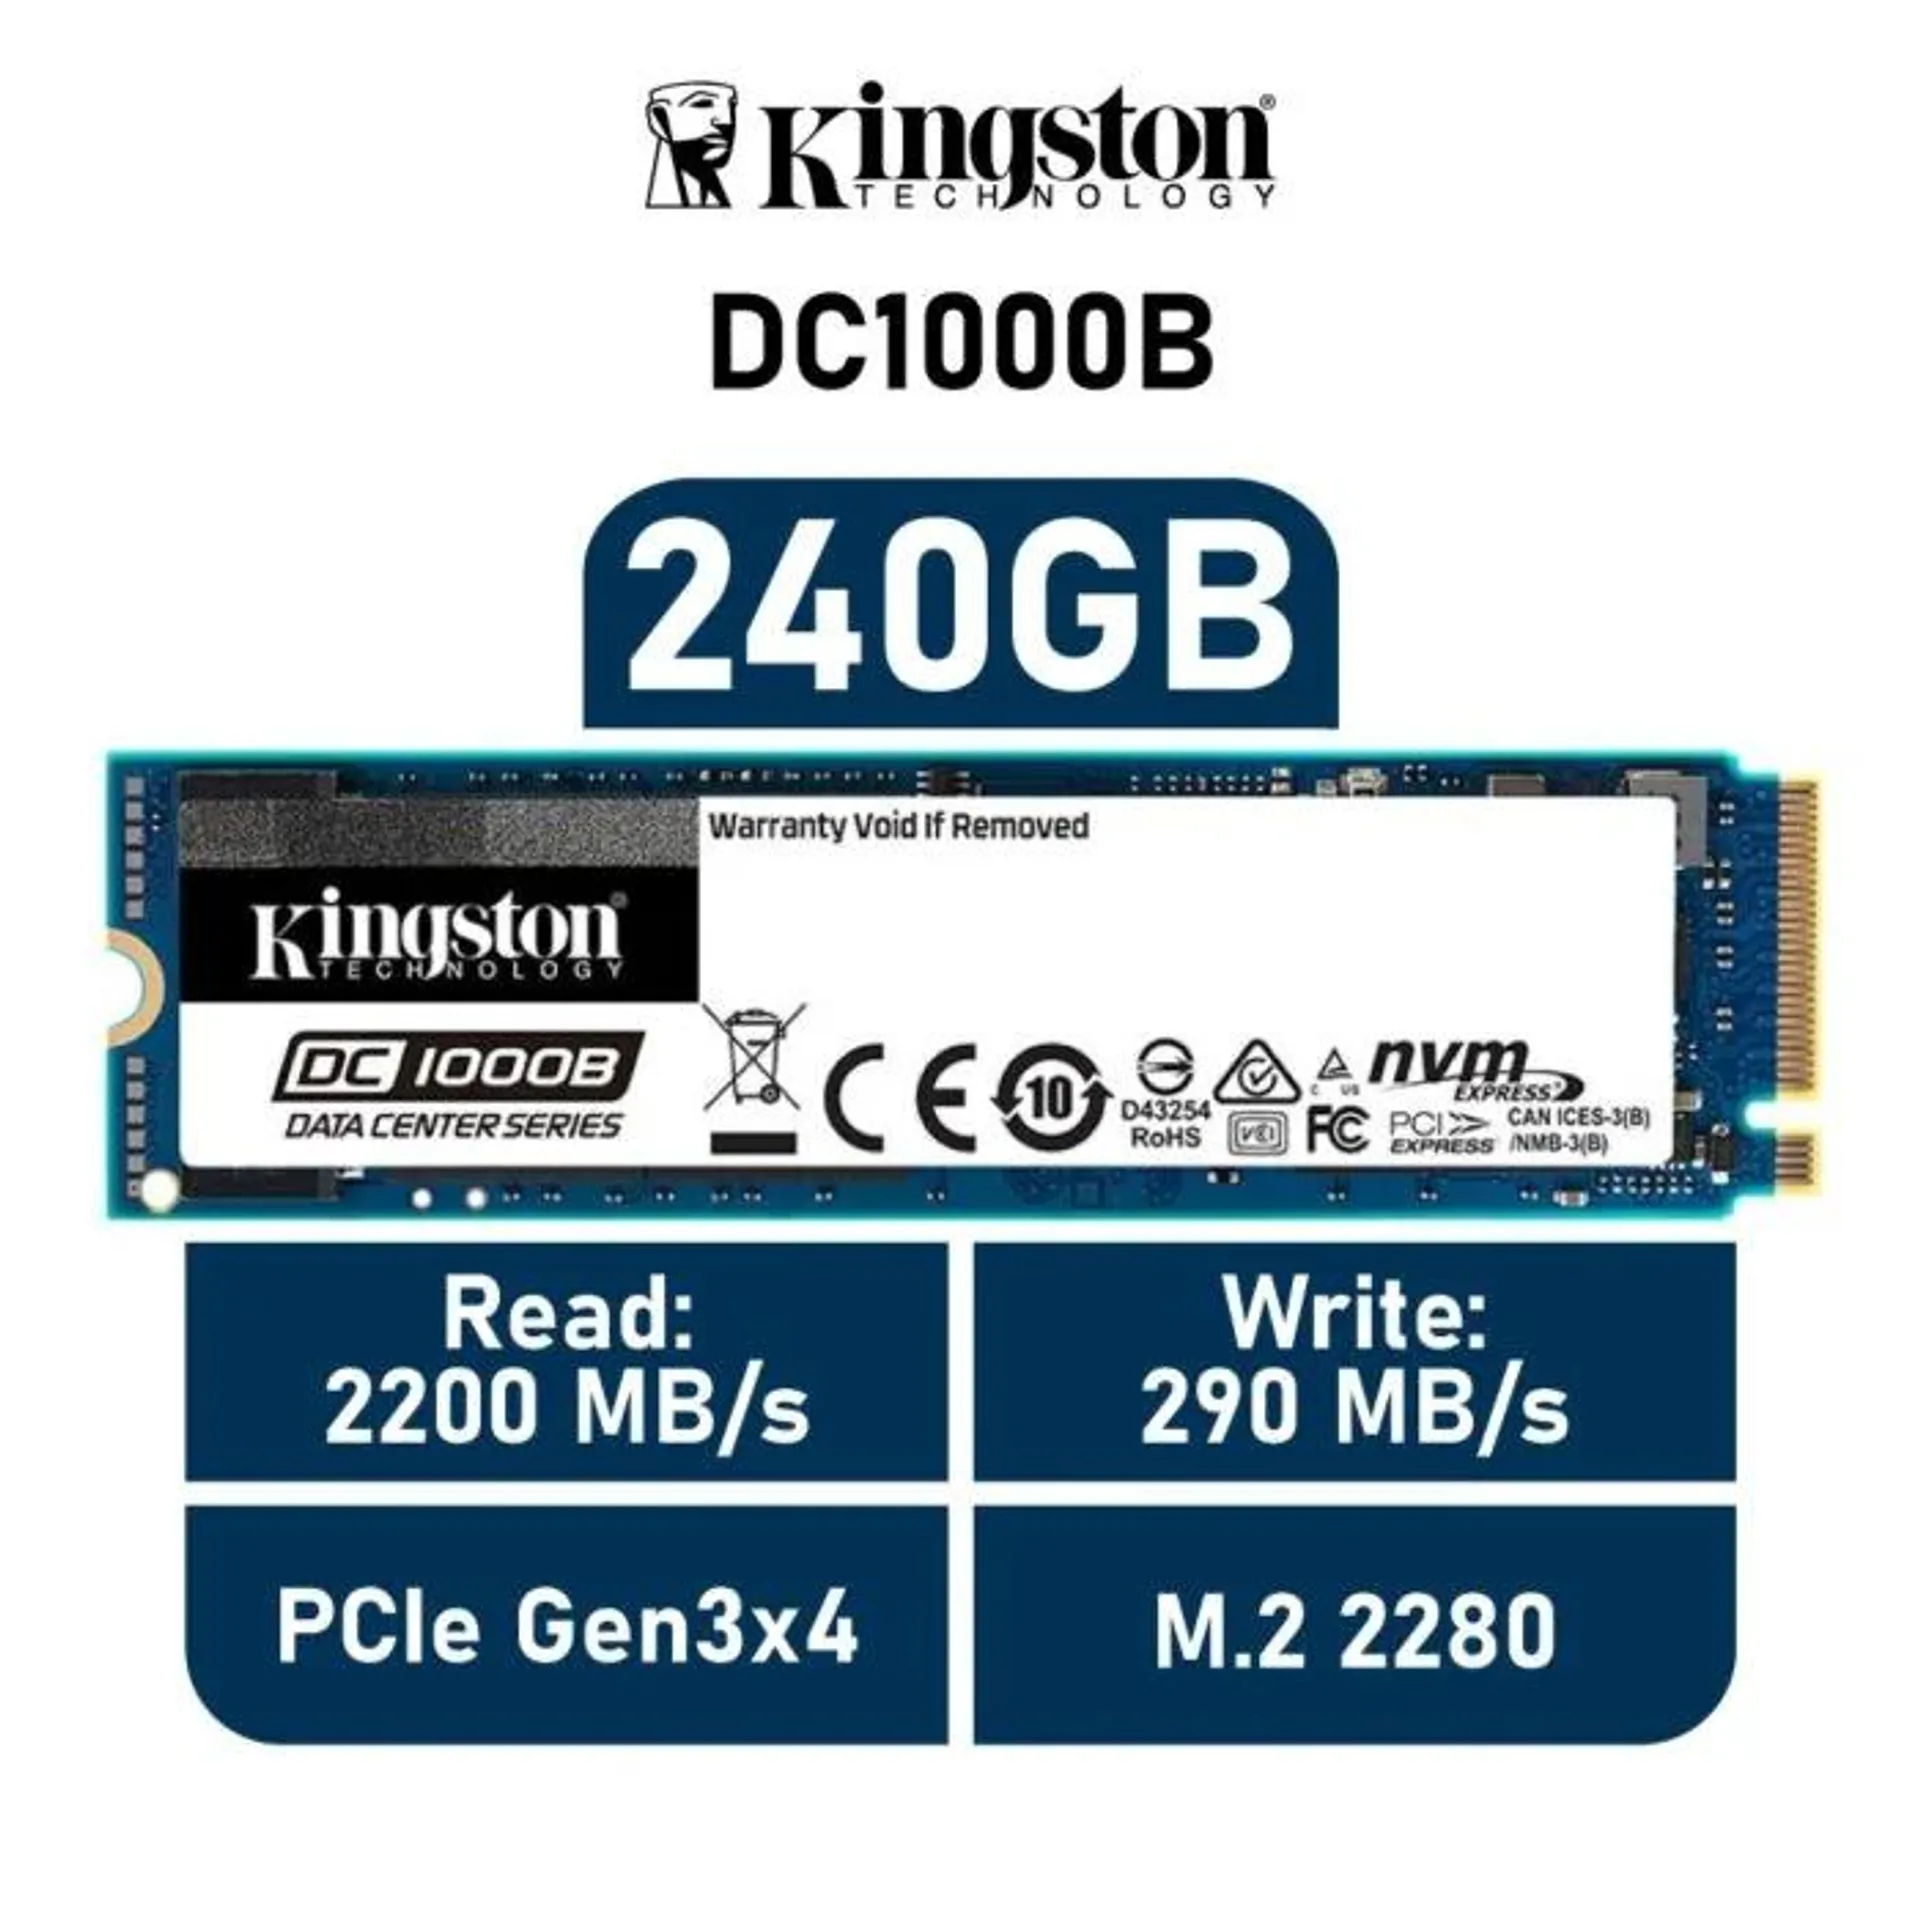 Kingston DC1000B 240GB PCIe Gen3x4 SEDC1000BM8/240G M.2 2280 Solid State Drive